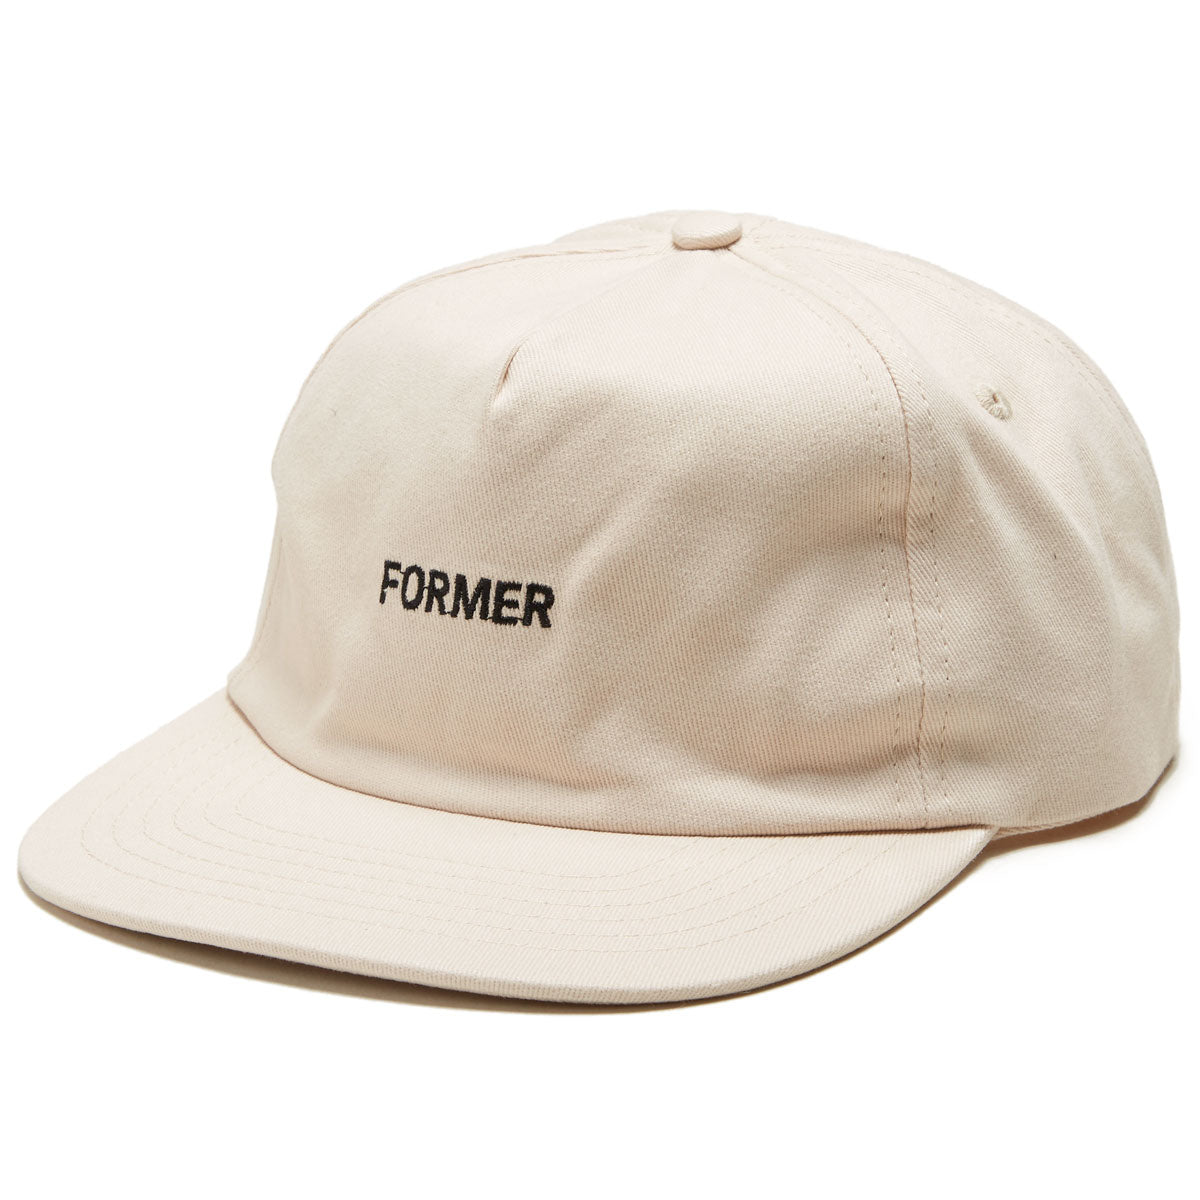 Former Legacy Hat - Creme image 1